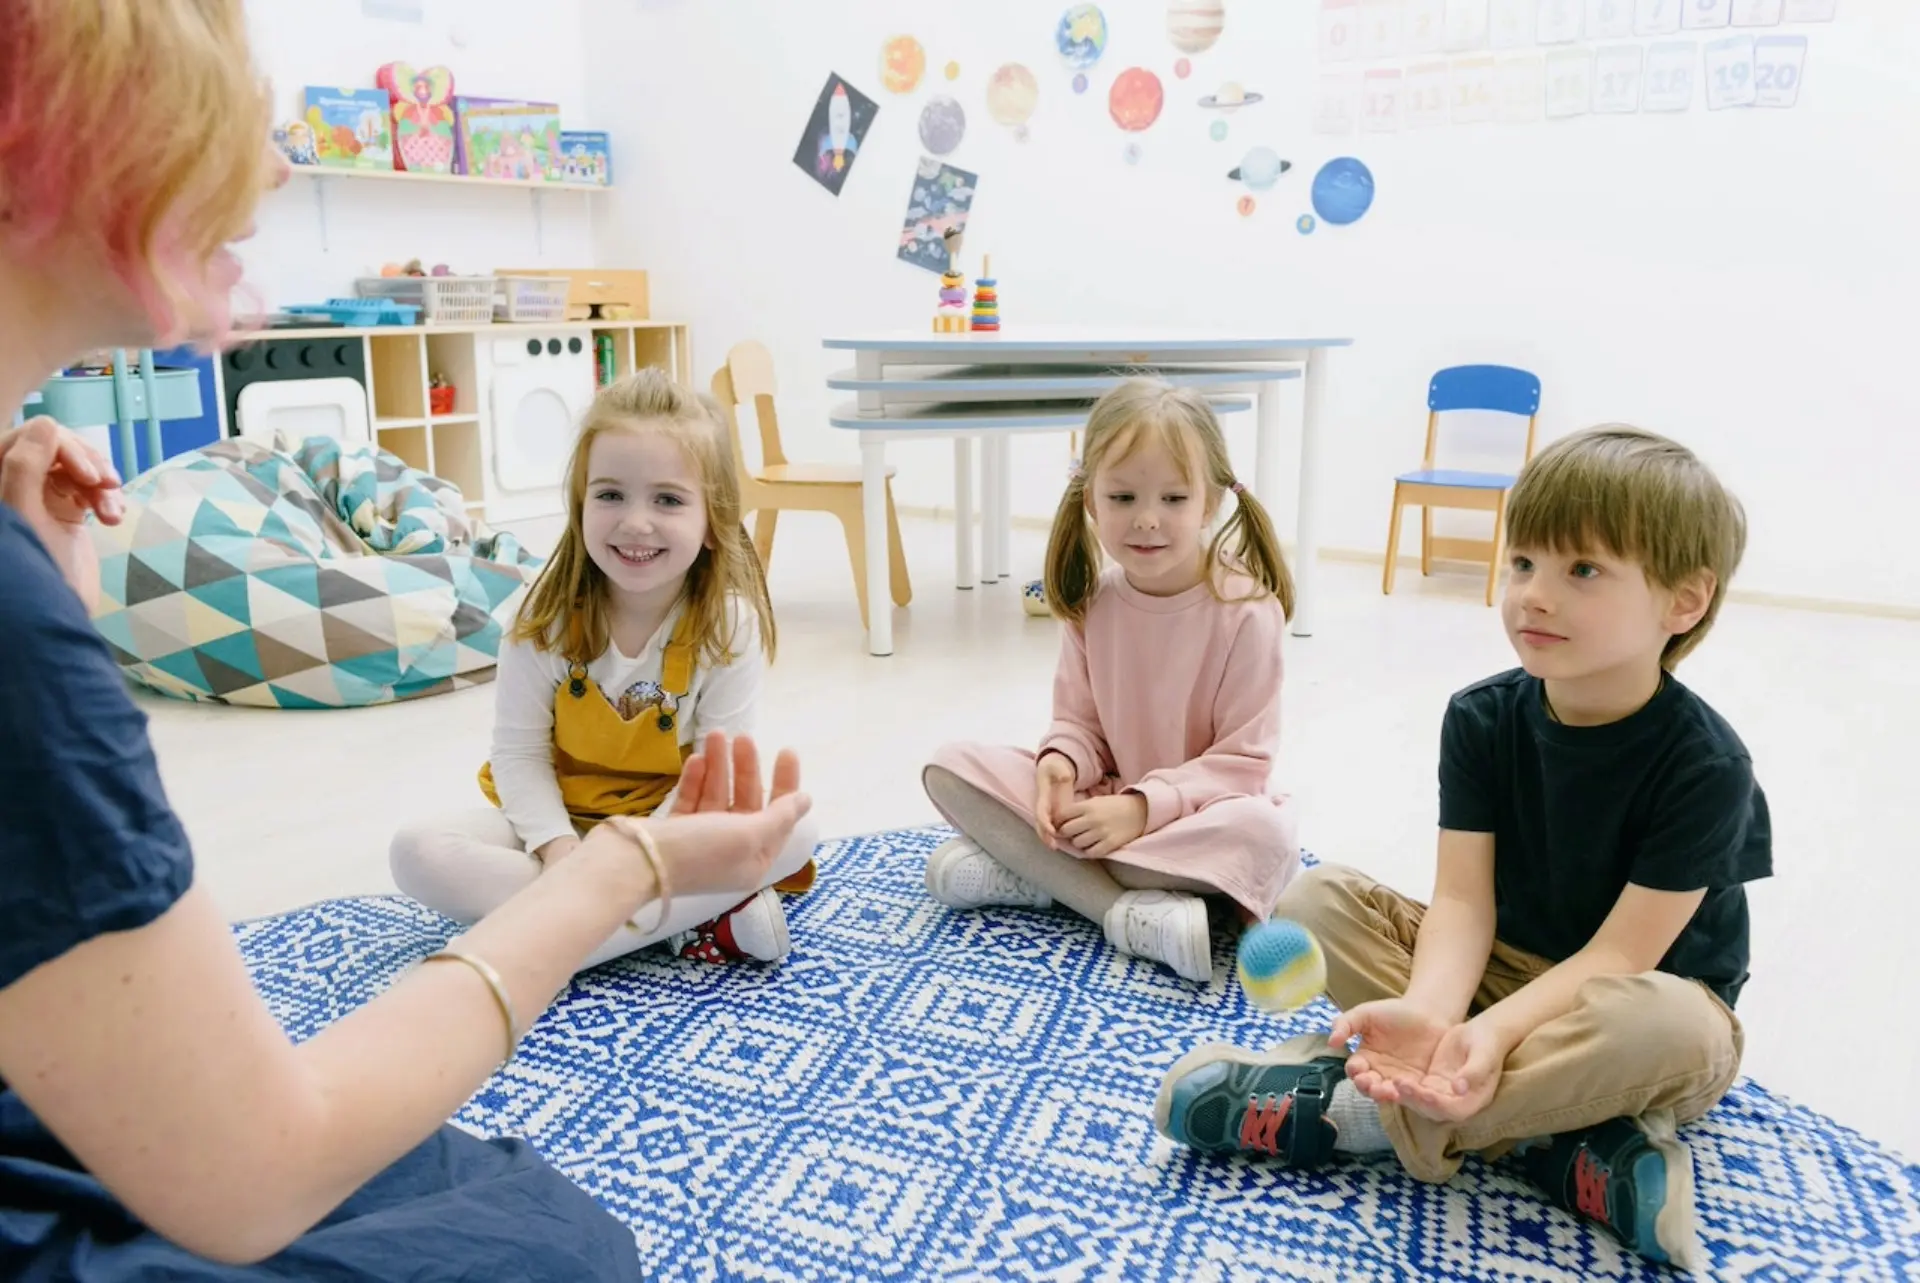 Three preschool children sit on a blue and white carpet while their teacher talks to them